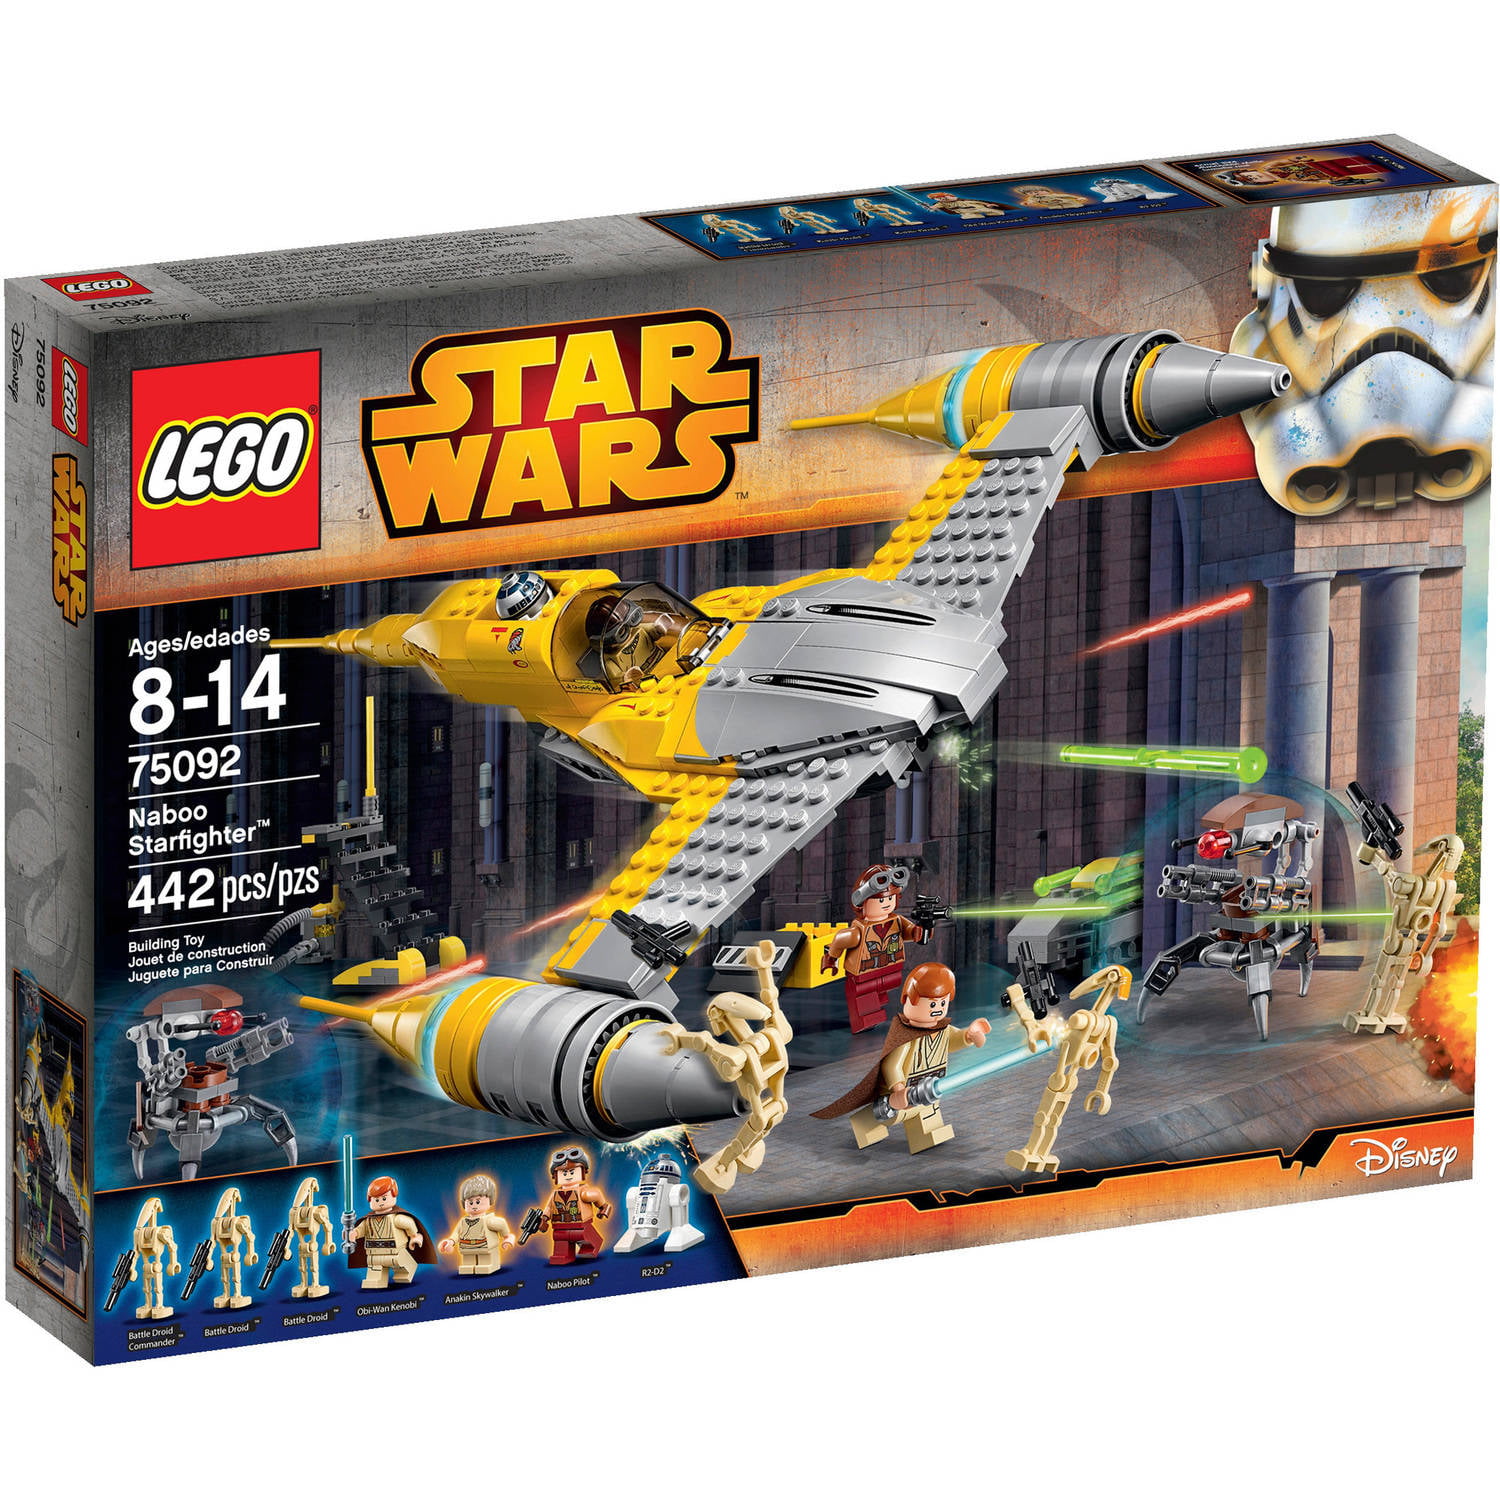 LEGO Star Wars Naboo Starfighter - Walmart.com - Walmart.com